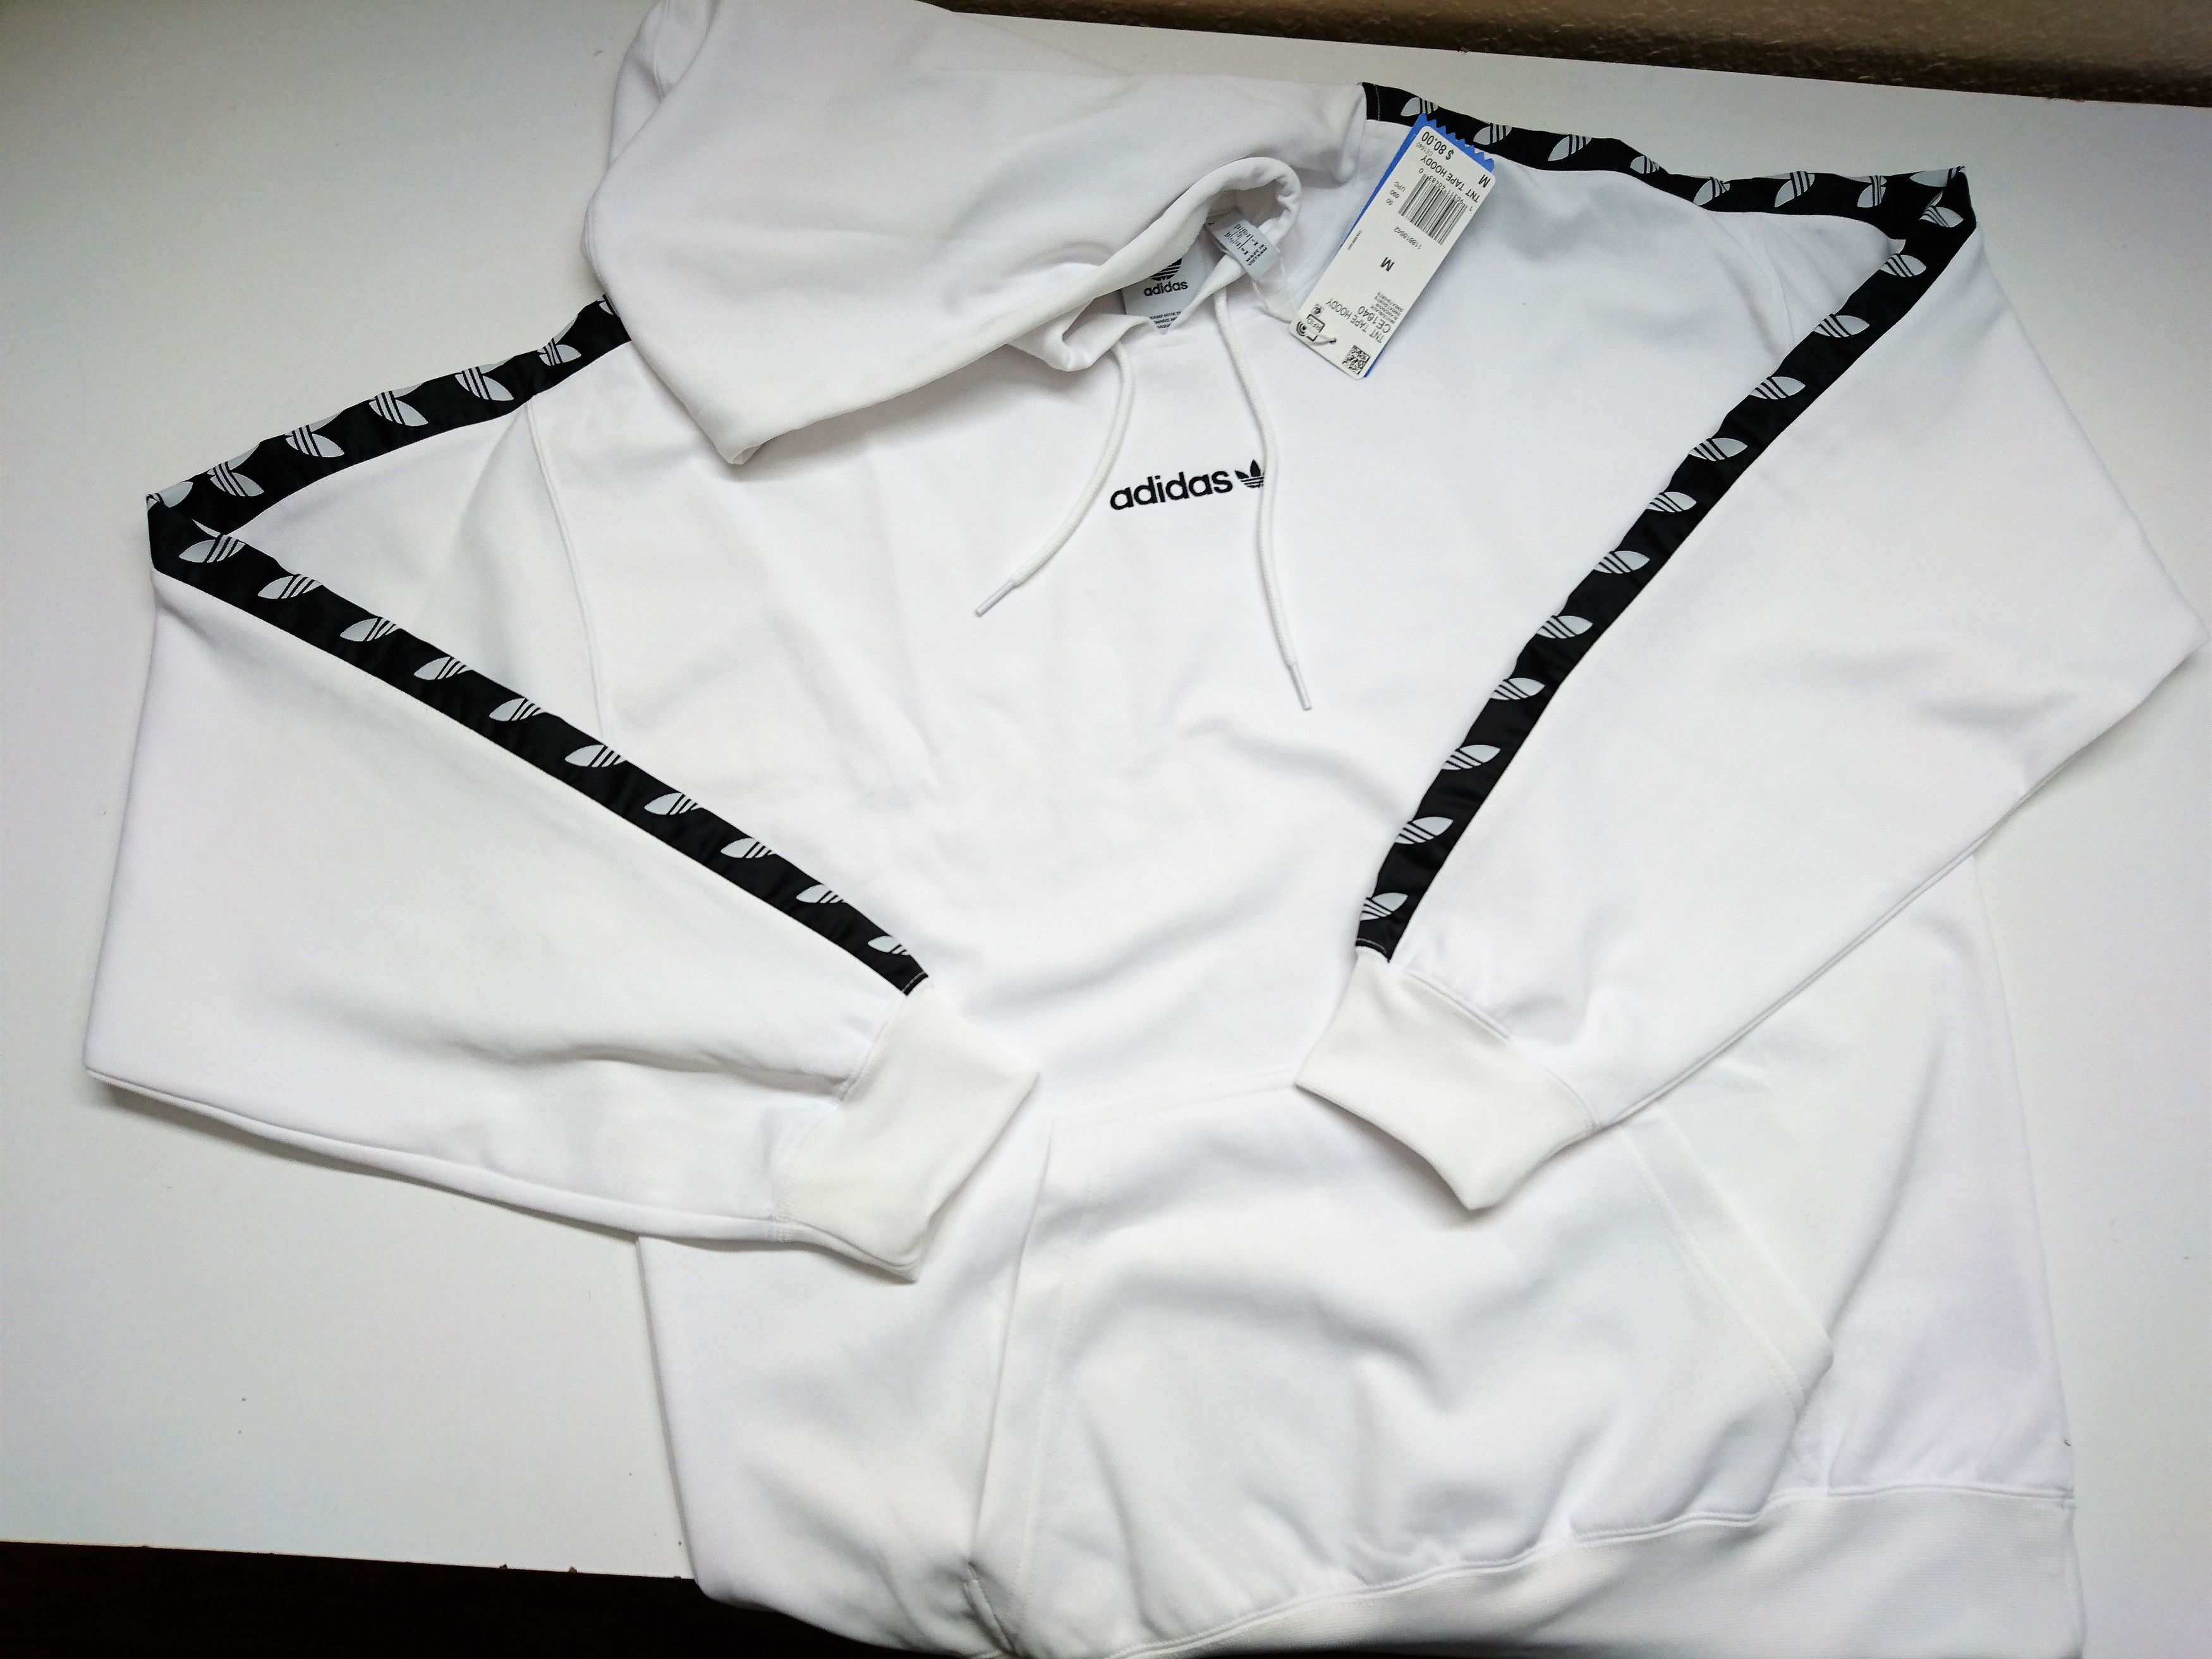 Adidas Adidas Originals TNT Tape pullover hoodie Size US M / EU 48-50 / 2 - 5 Thumbnail